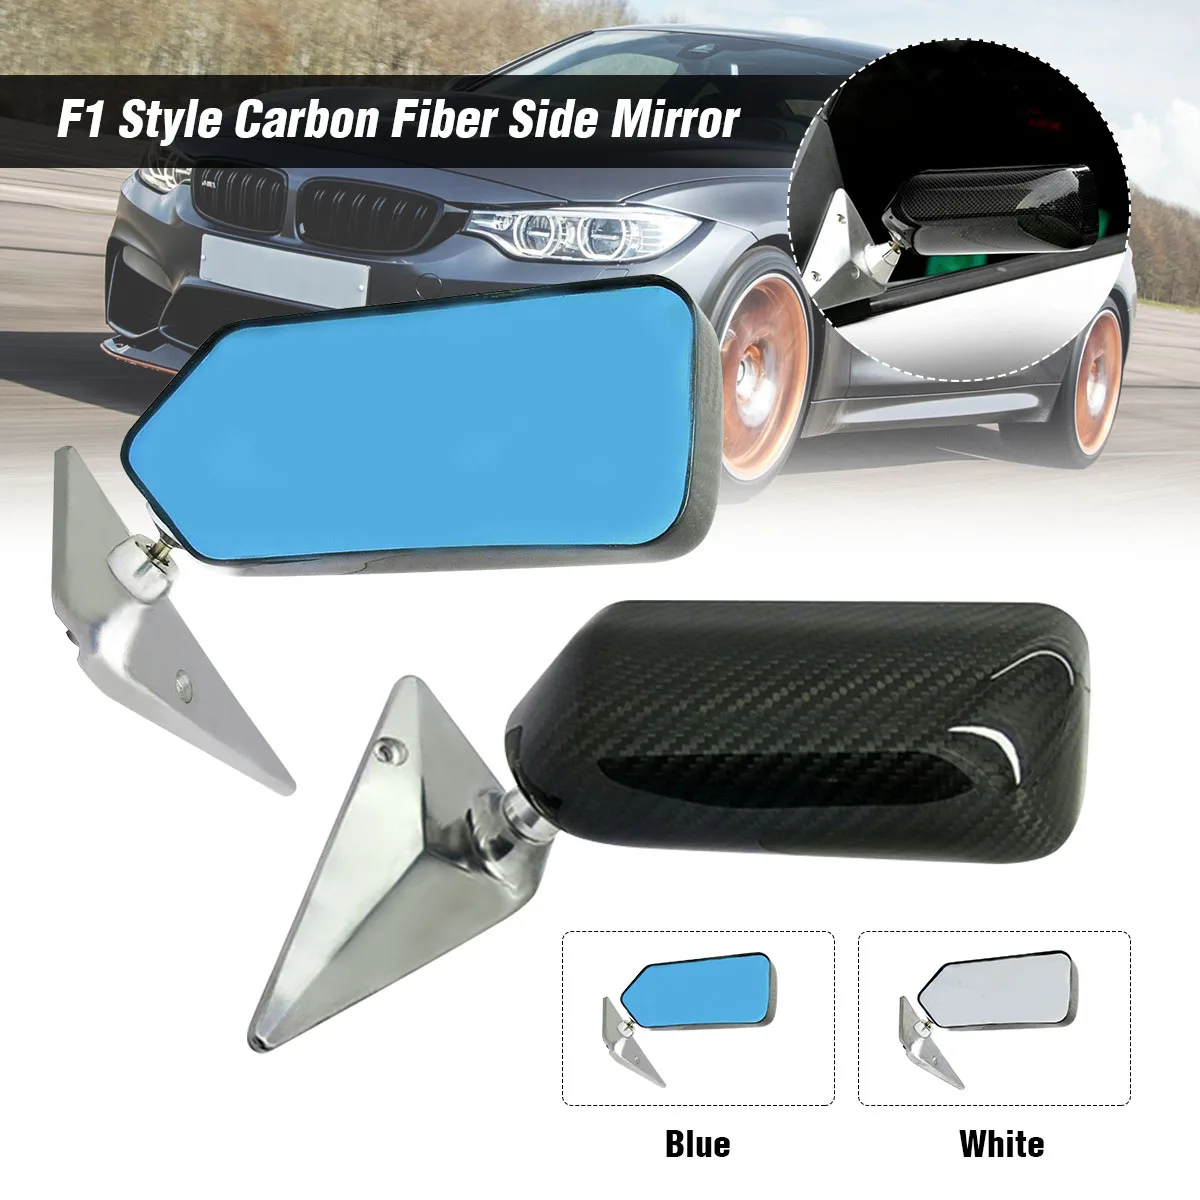 

2Pcs Carbon Fiber Look Silver/Blue Universal Car Side Mirror Rearview mirror cover Auto Rear View Side Mirror Cover For most Car